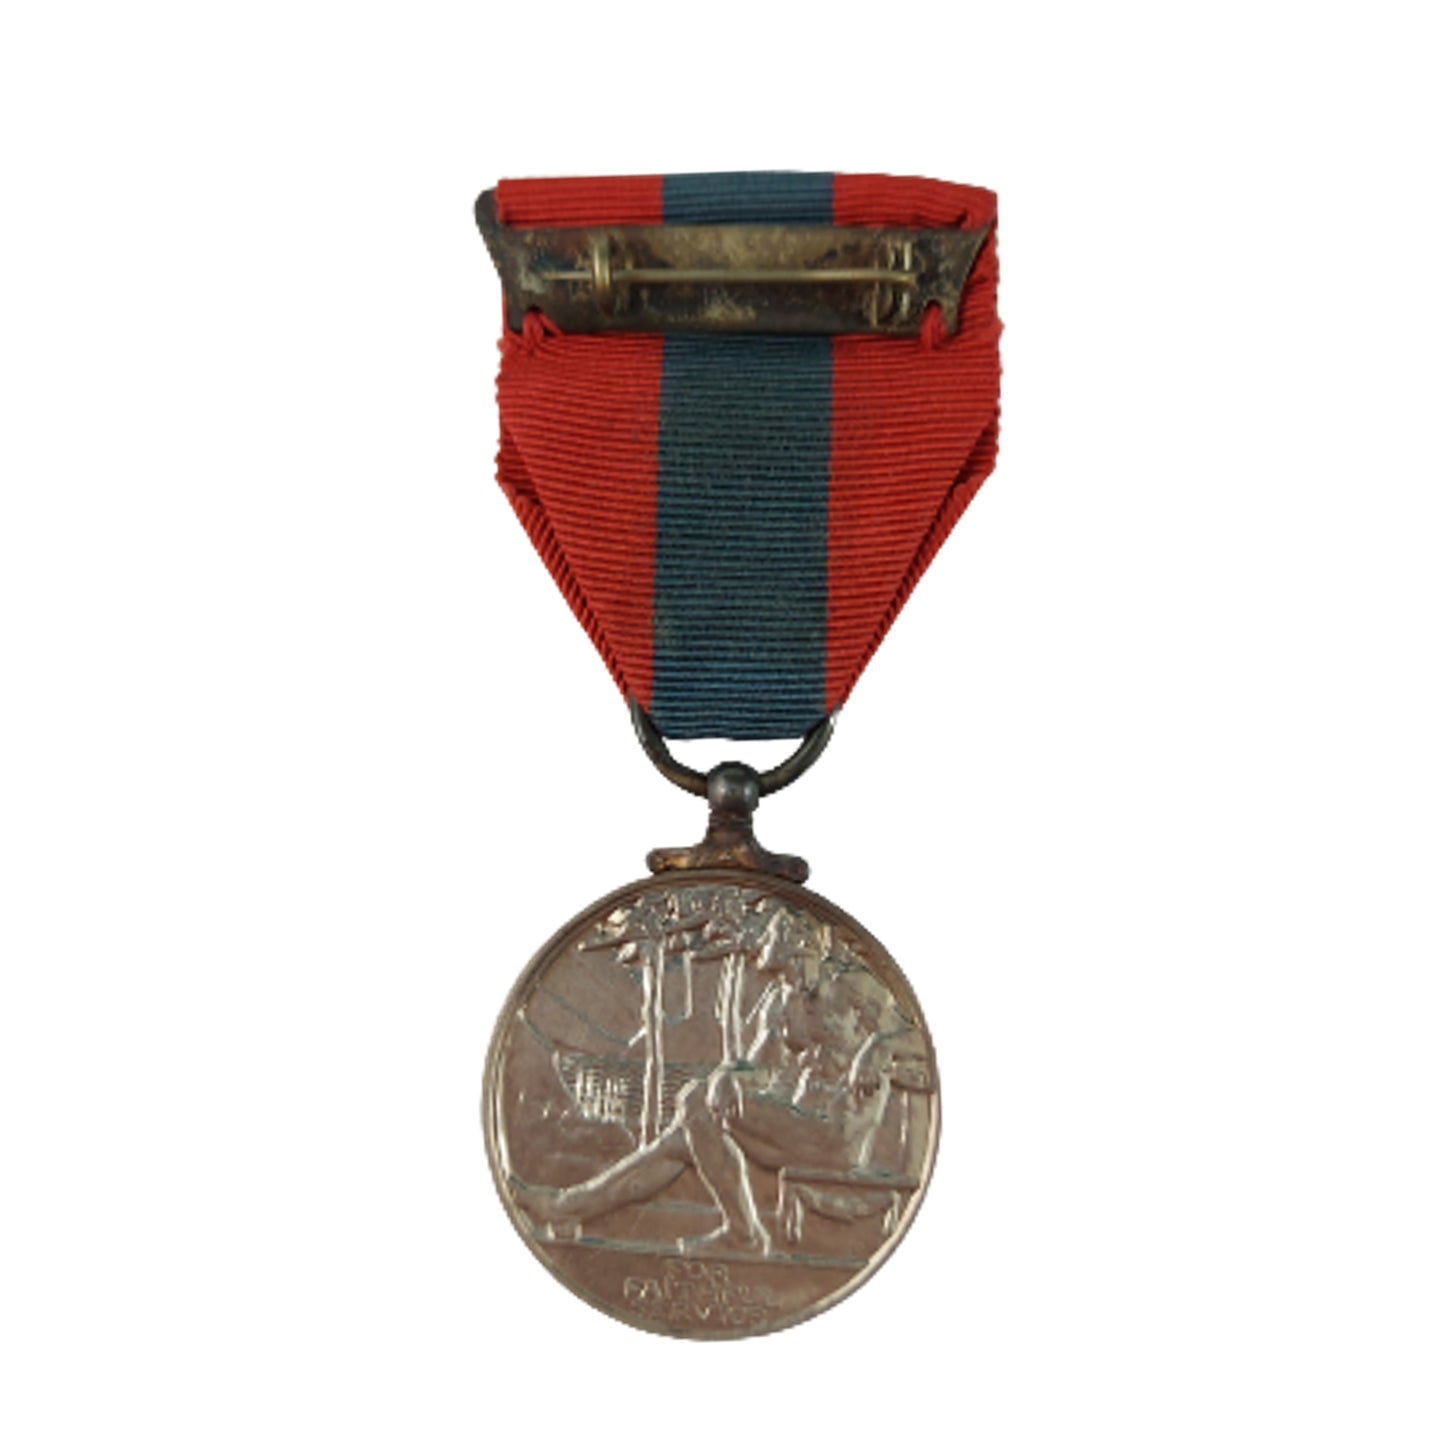 Named Imperial Service Medal George VI